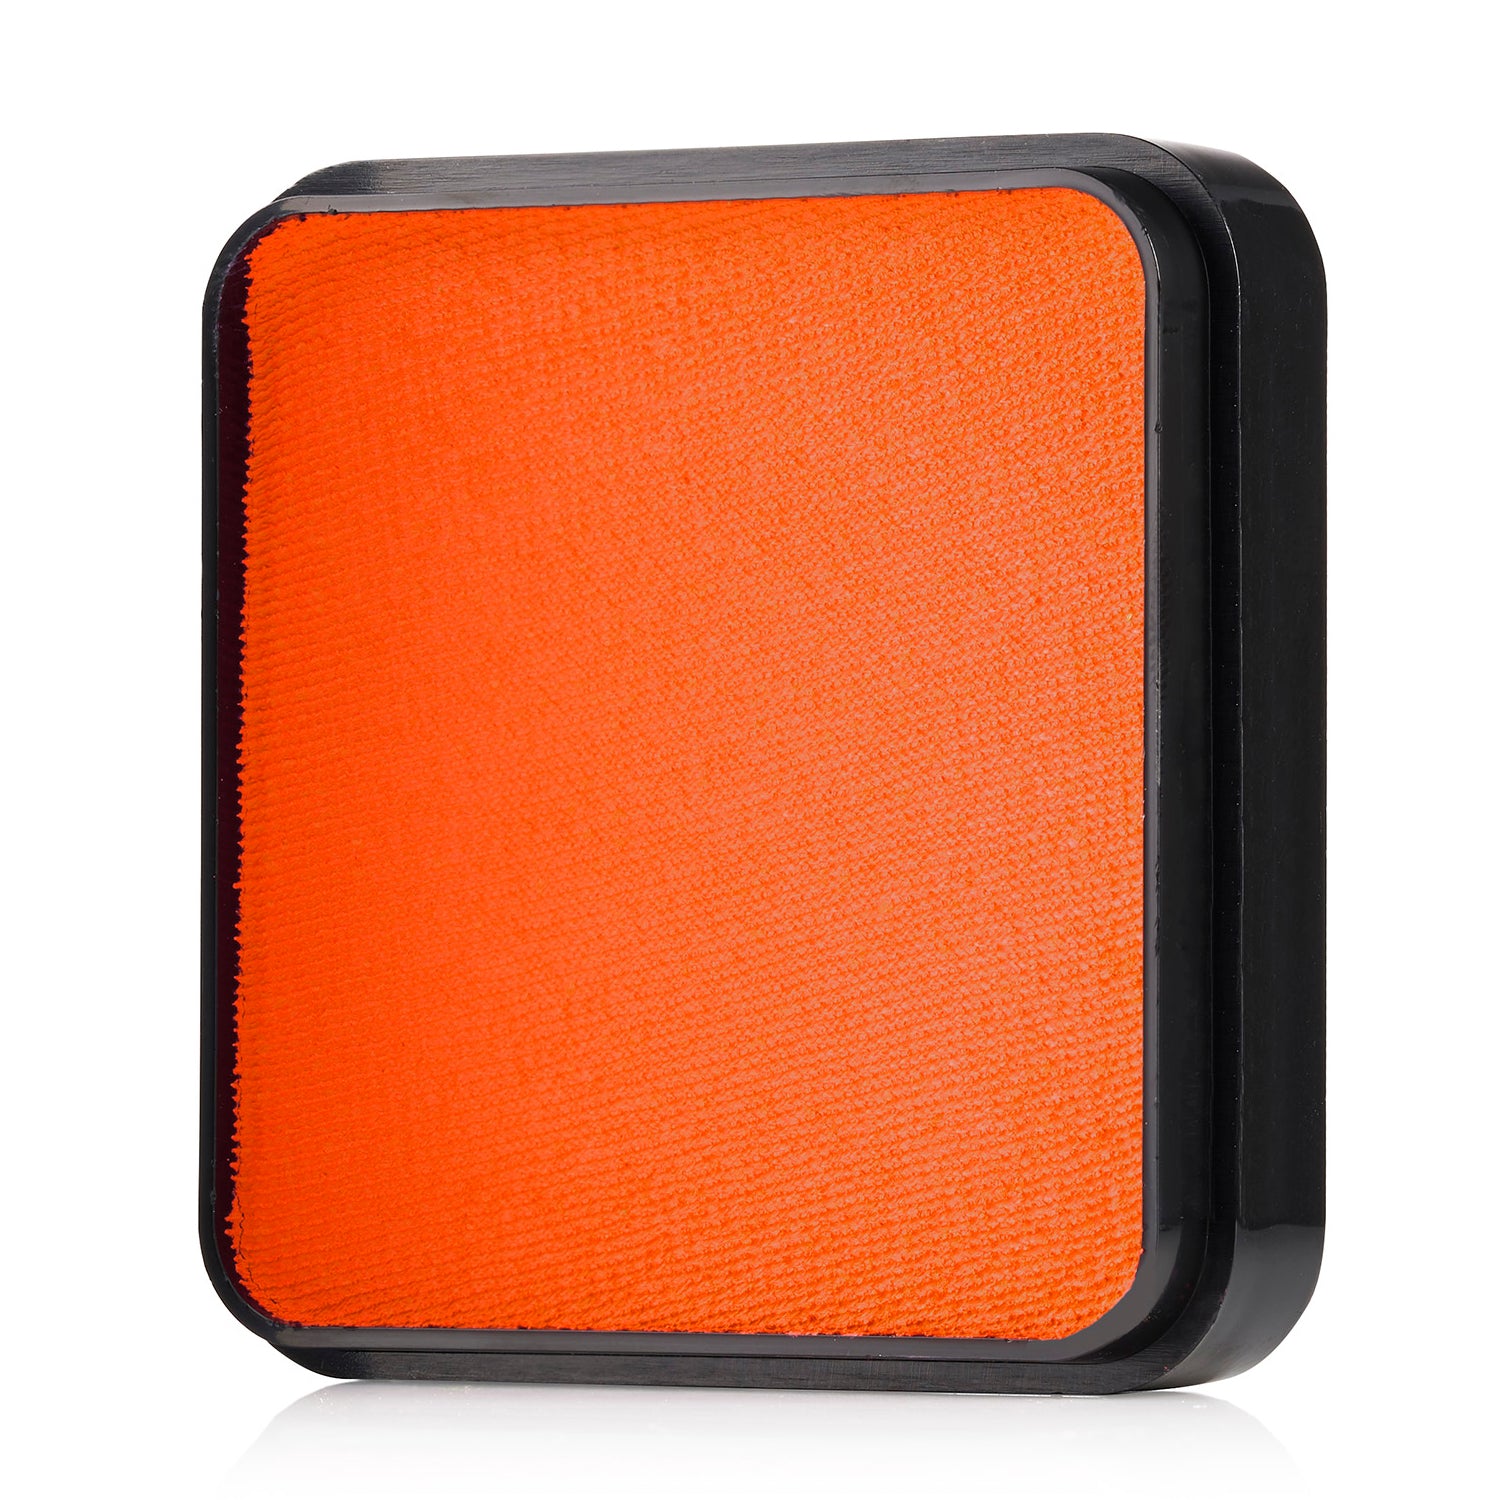 Kraze FX Face & Body Paint - Orange (25 gm)